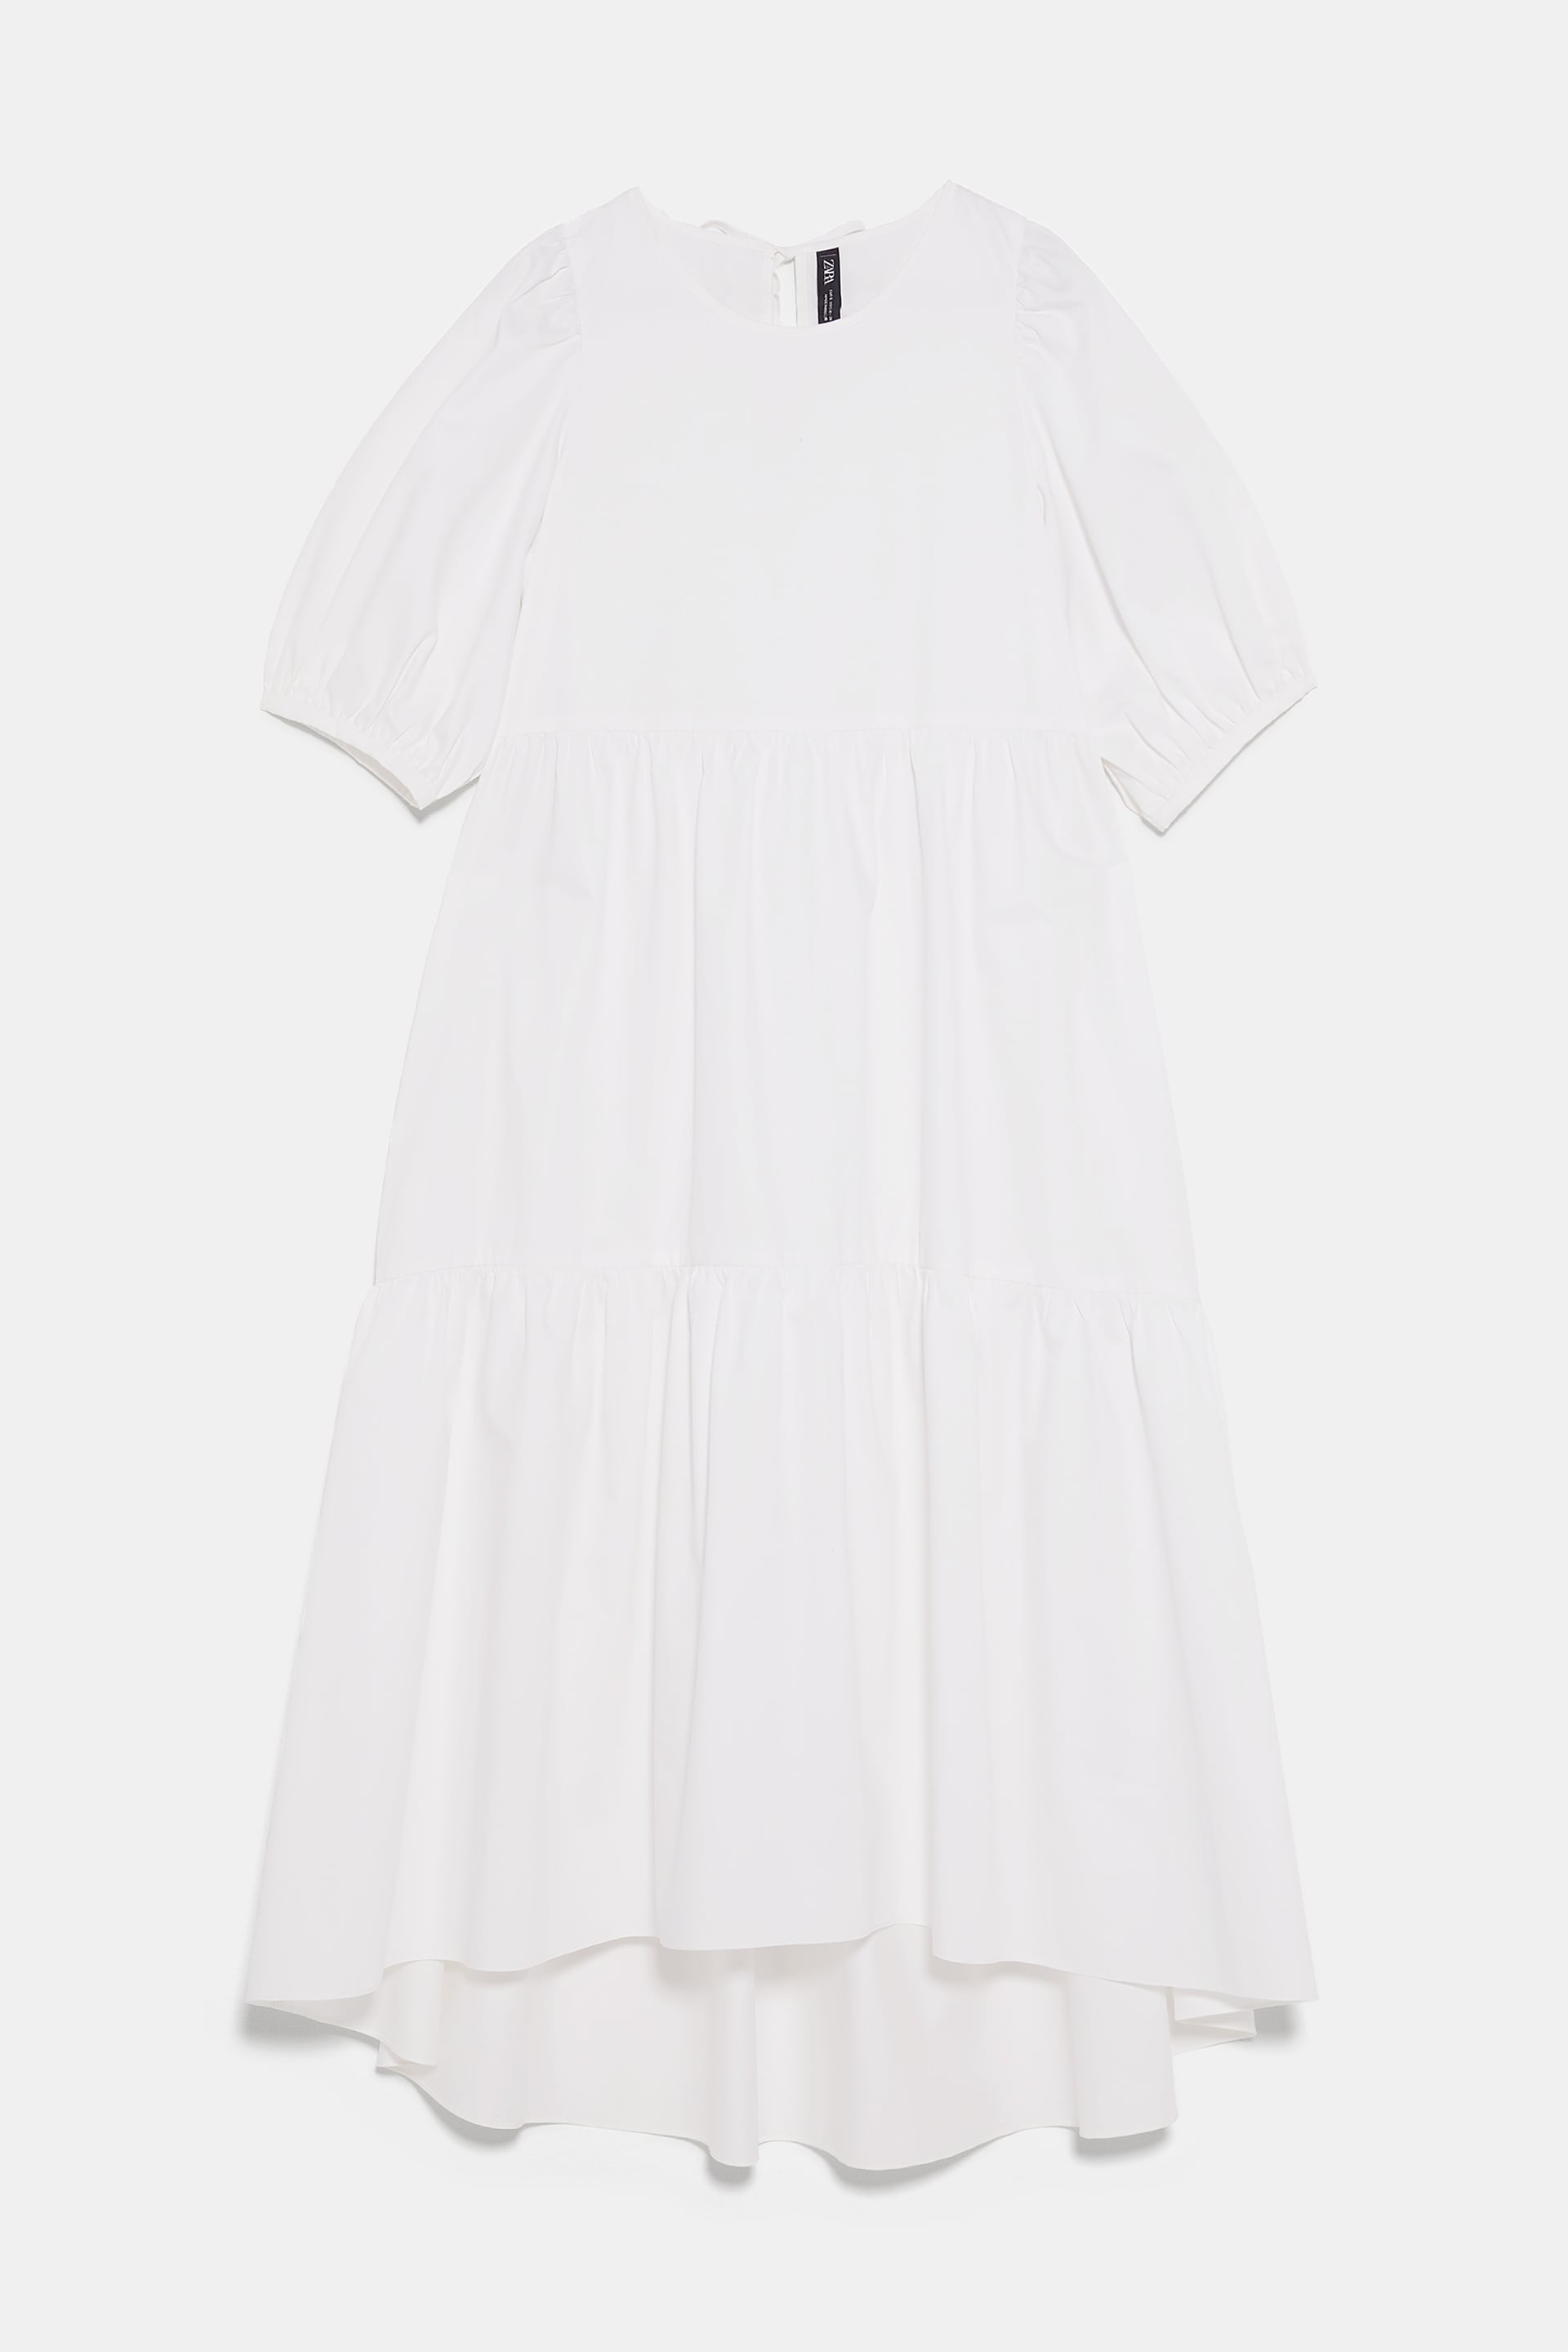 Say hello to the new cult Zara dress 